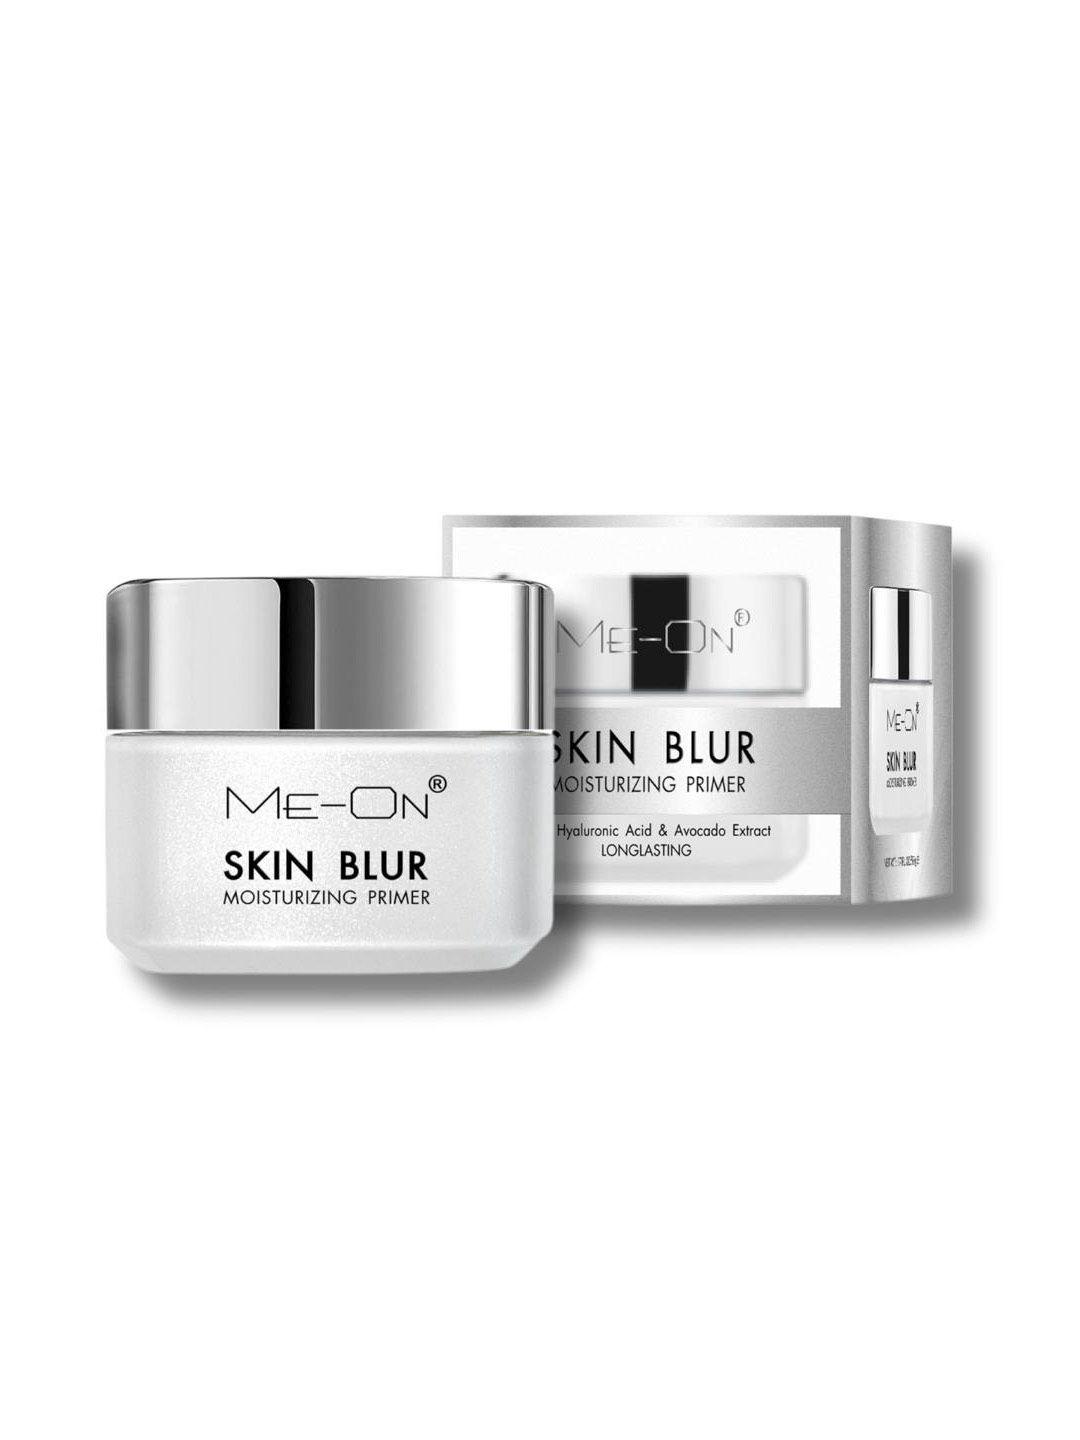 me-on skin blur moisturizing primer 50gm